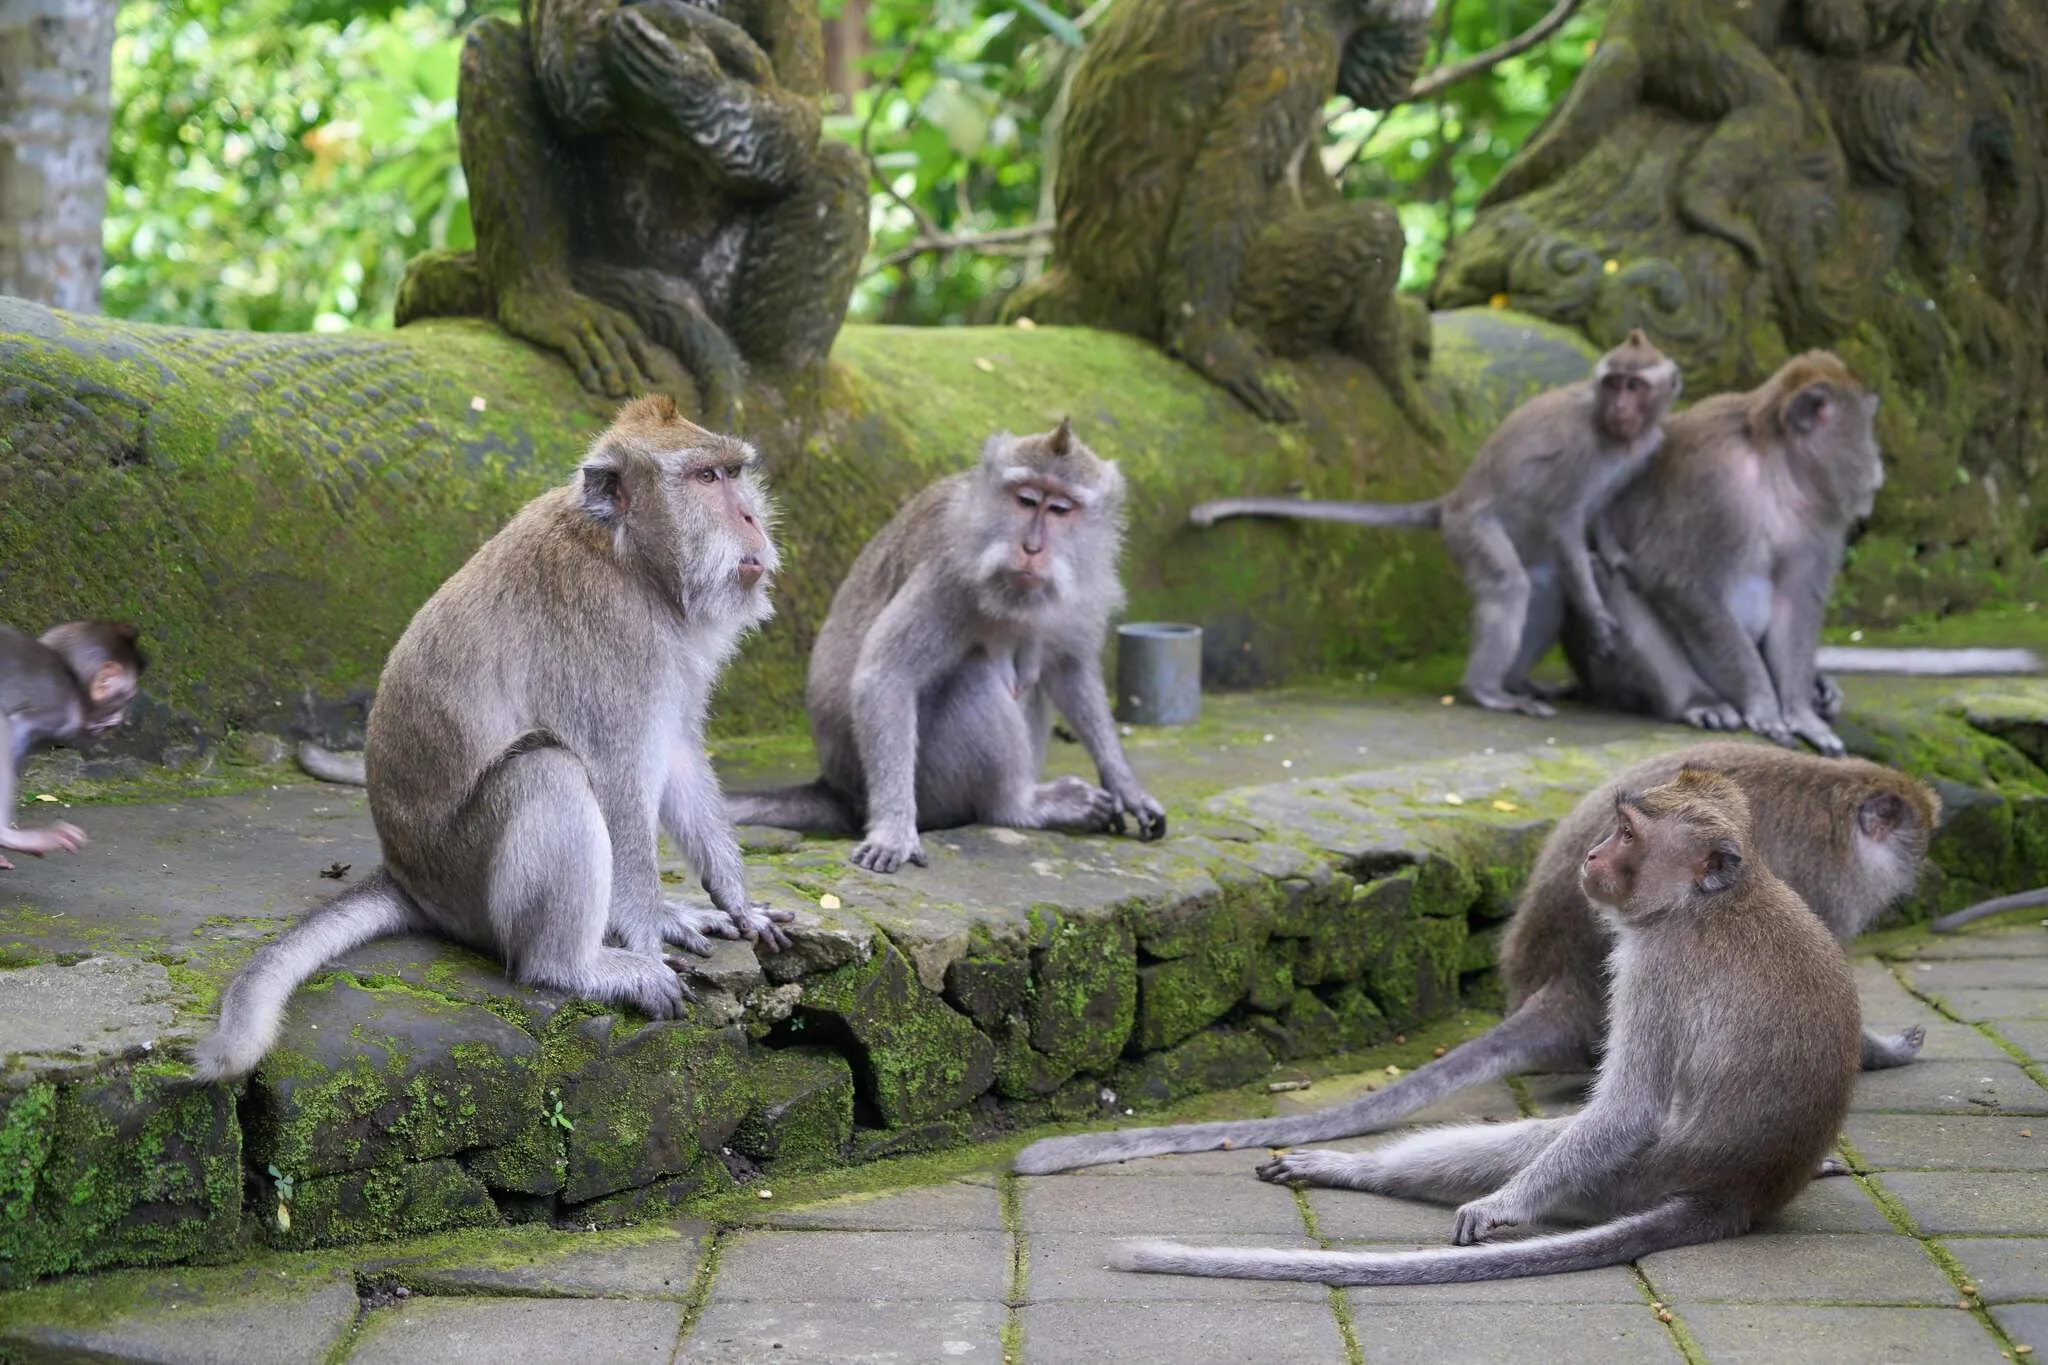 158 photos of Long-Tailed Monkeys